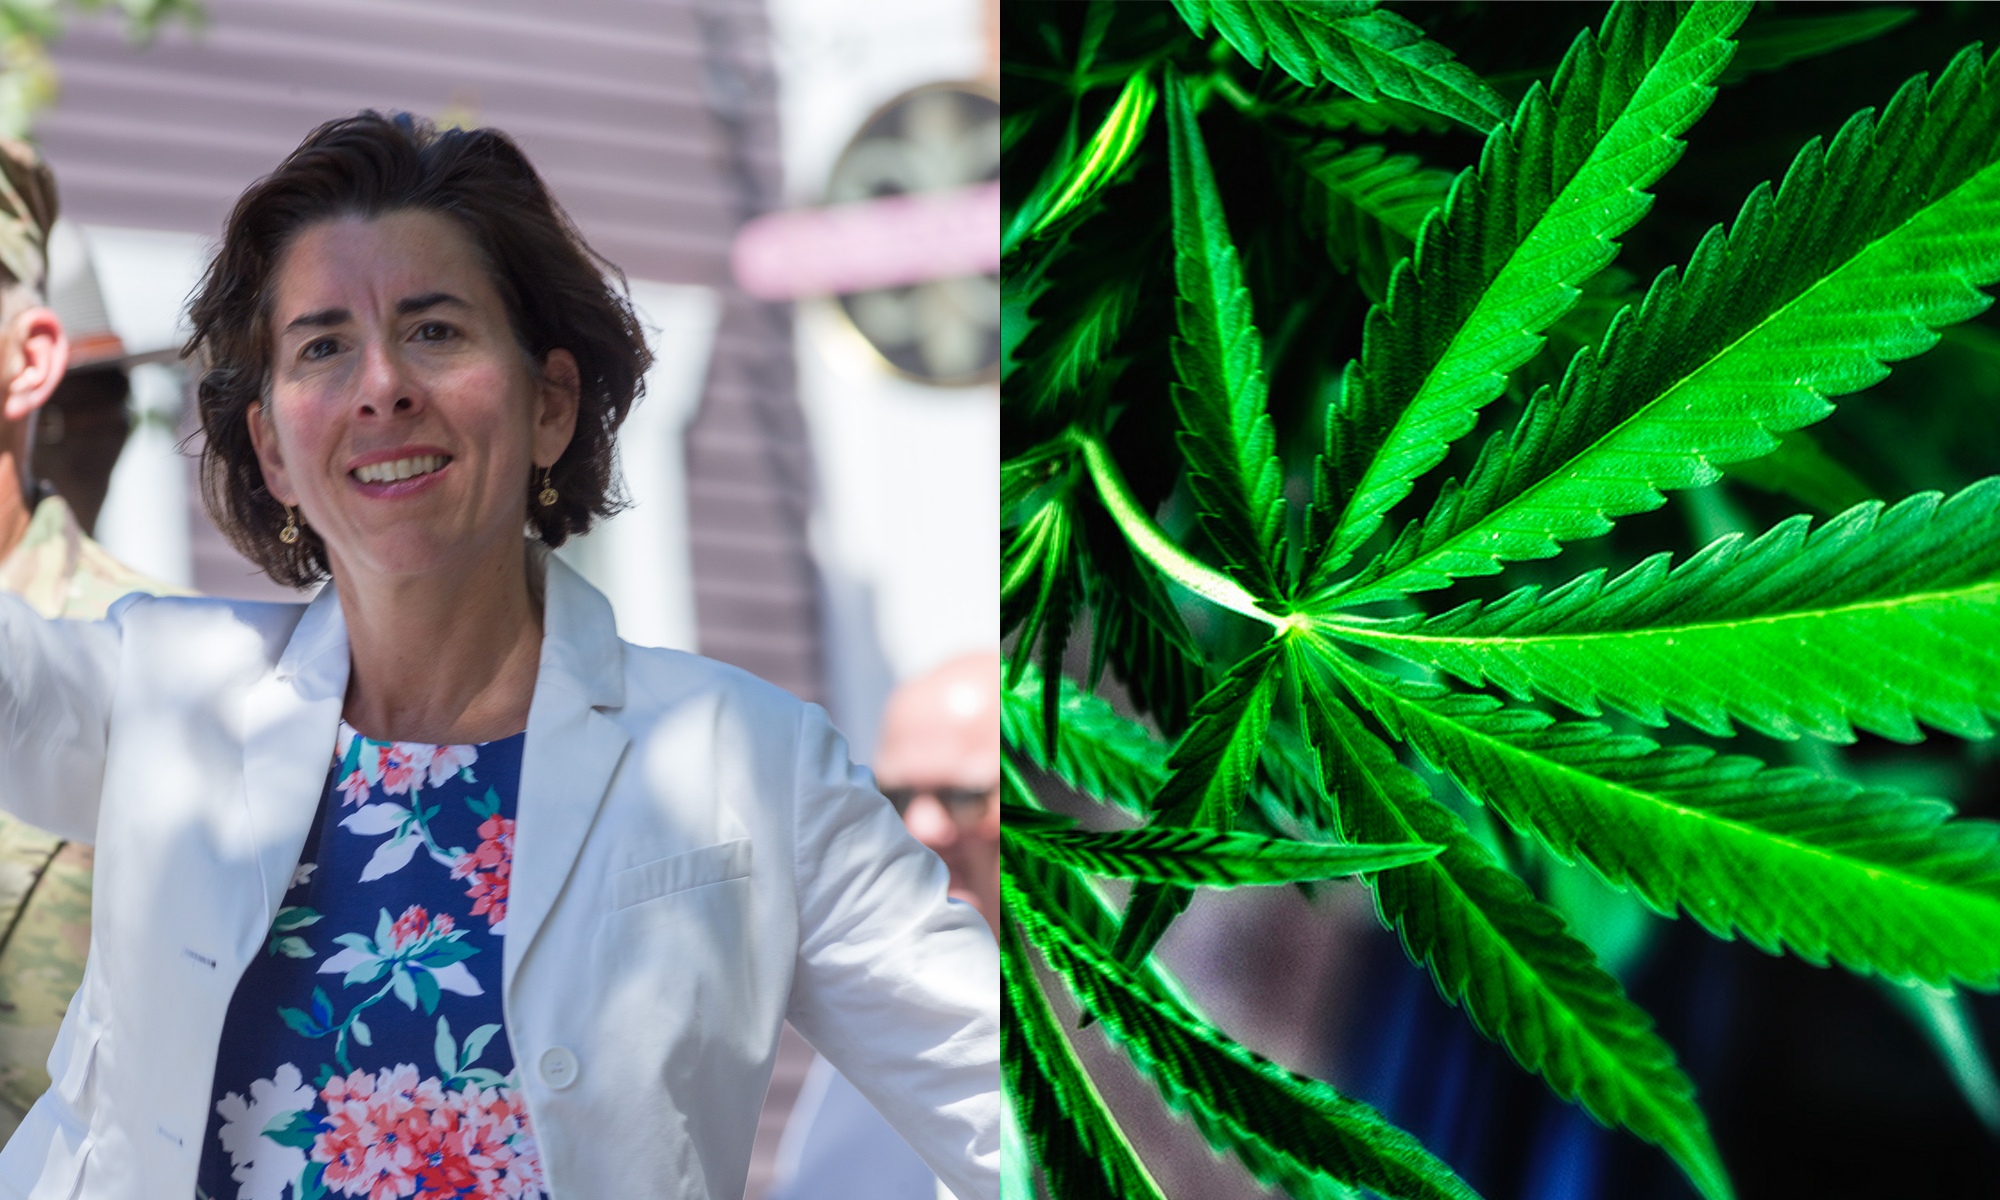 Rhode Island may be peer pressured into legalizing marijuana by Neighbors says, Governor